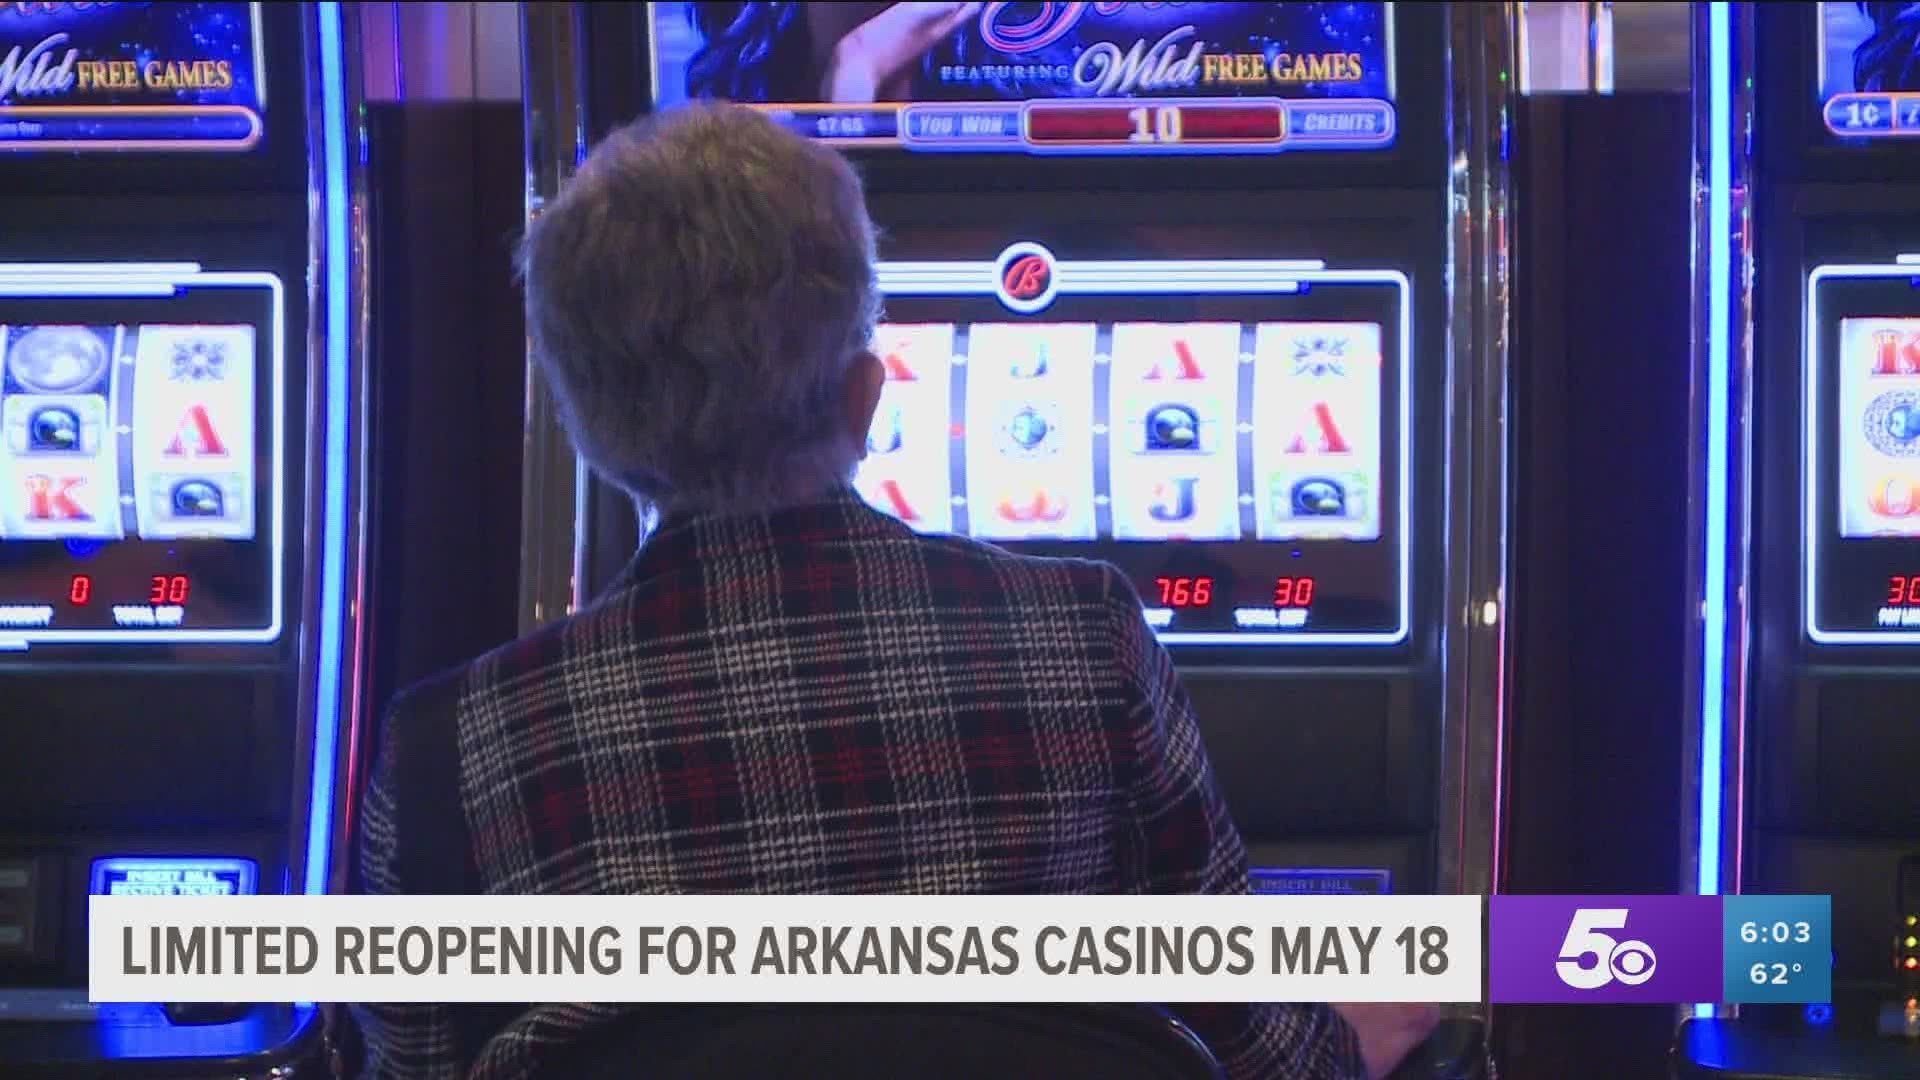 Arkansas casinos allowed to reopen